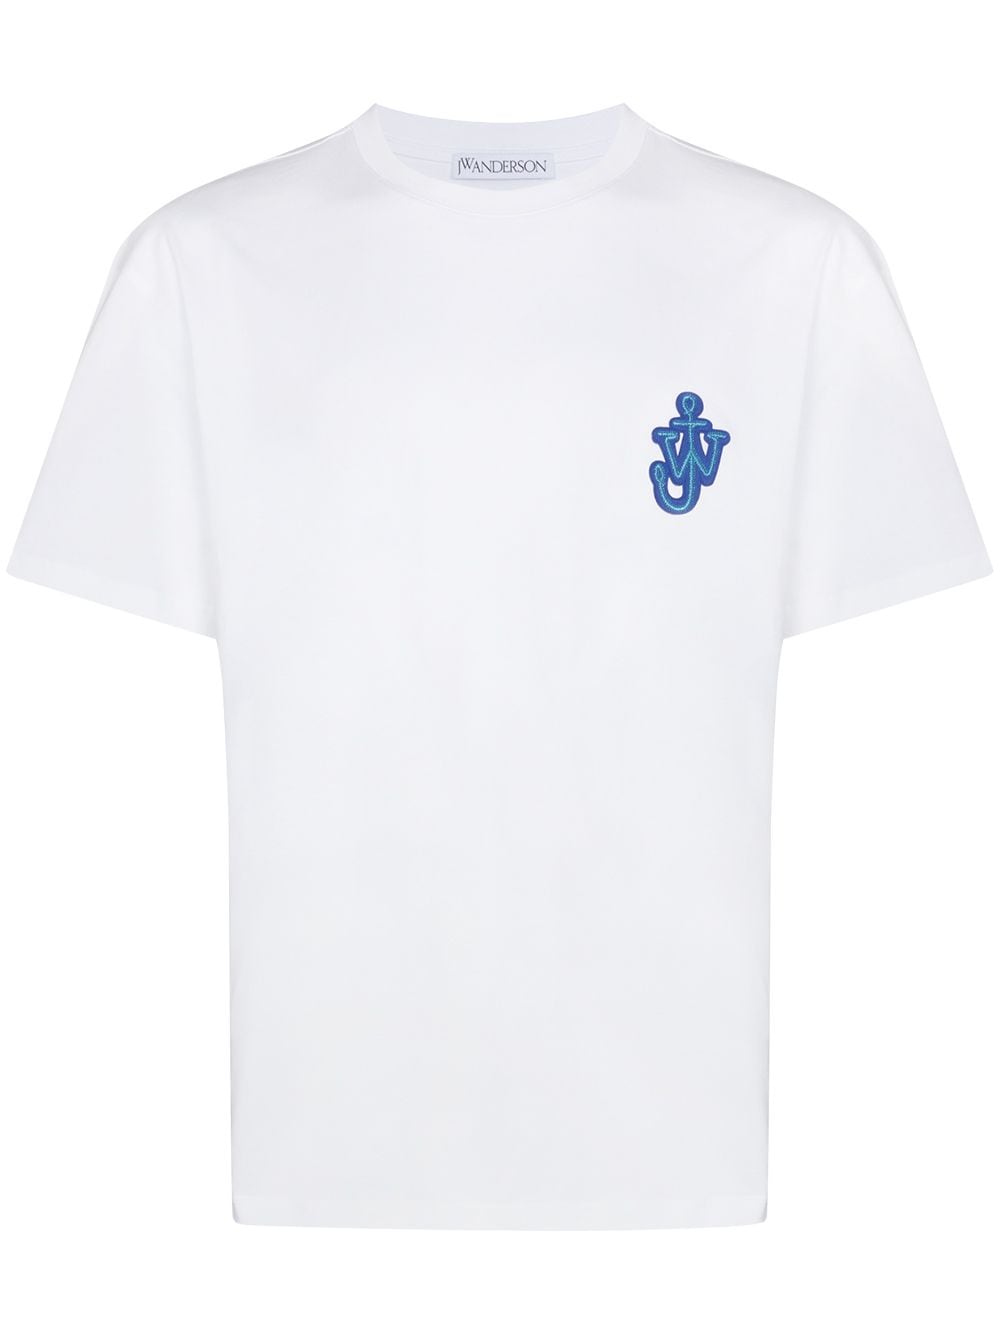 Anchor-patch cotton T-shirt<BR/><BR/><BR/>